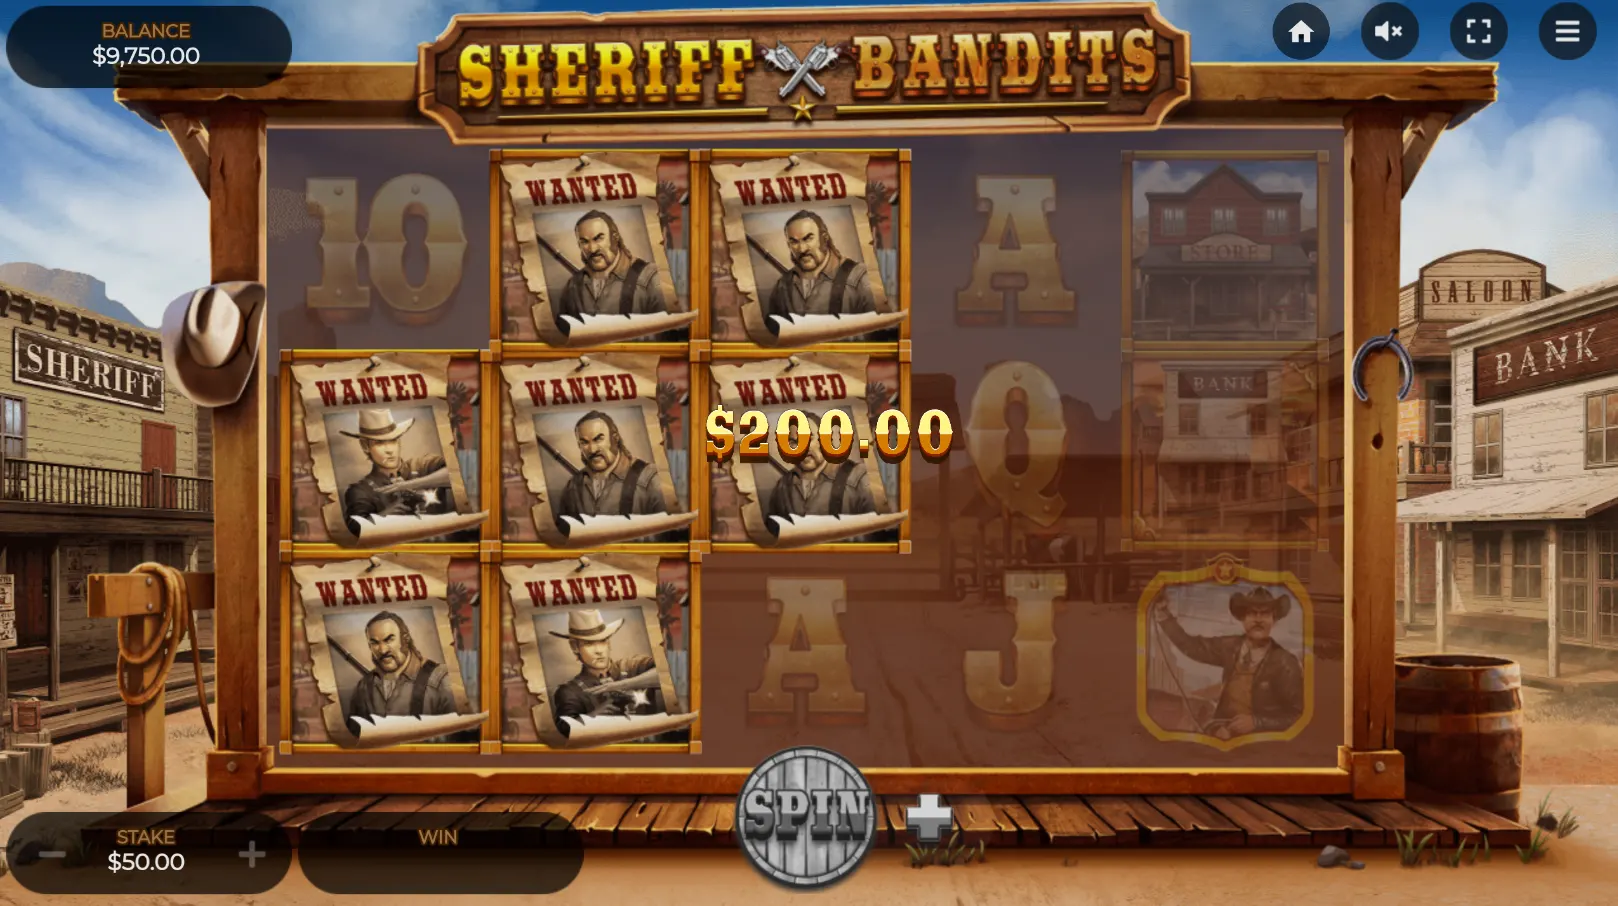 Sheriff vs. Bandits Symbols and Payouts